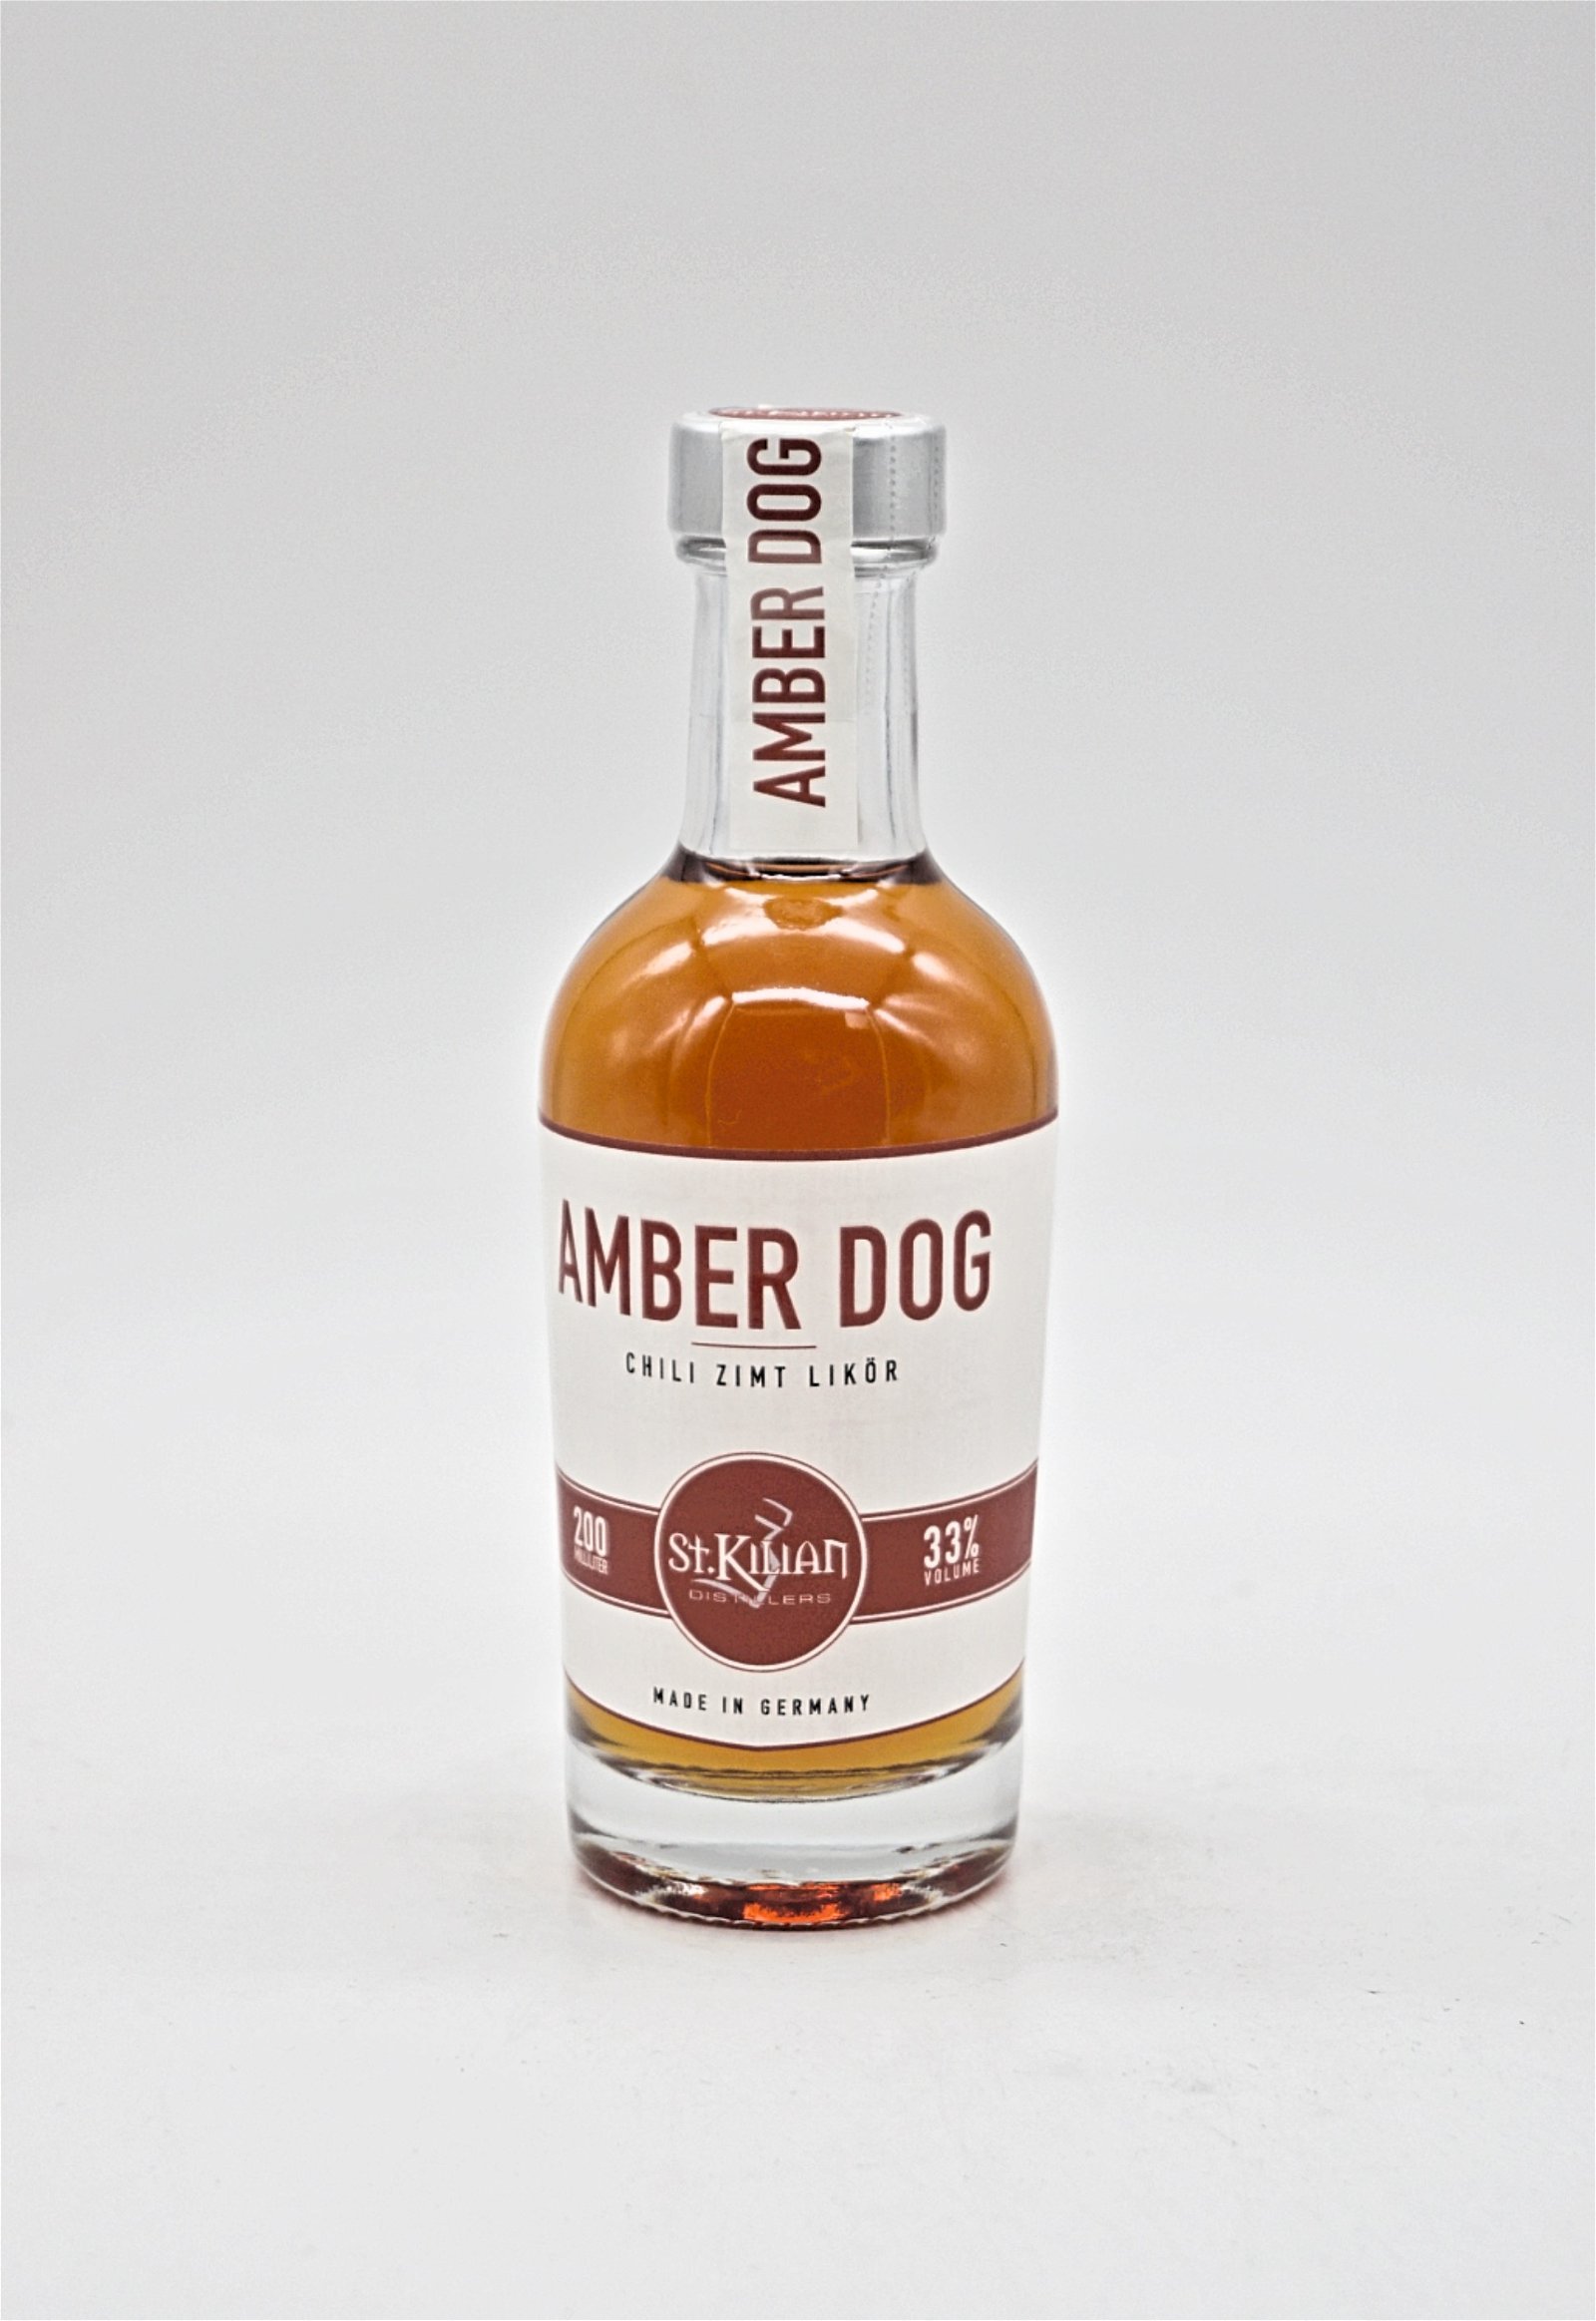 St. Kilian Distillers Amber Dog Chili Zimt Likör 